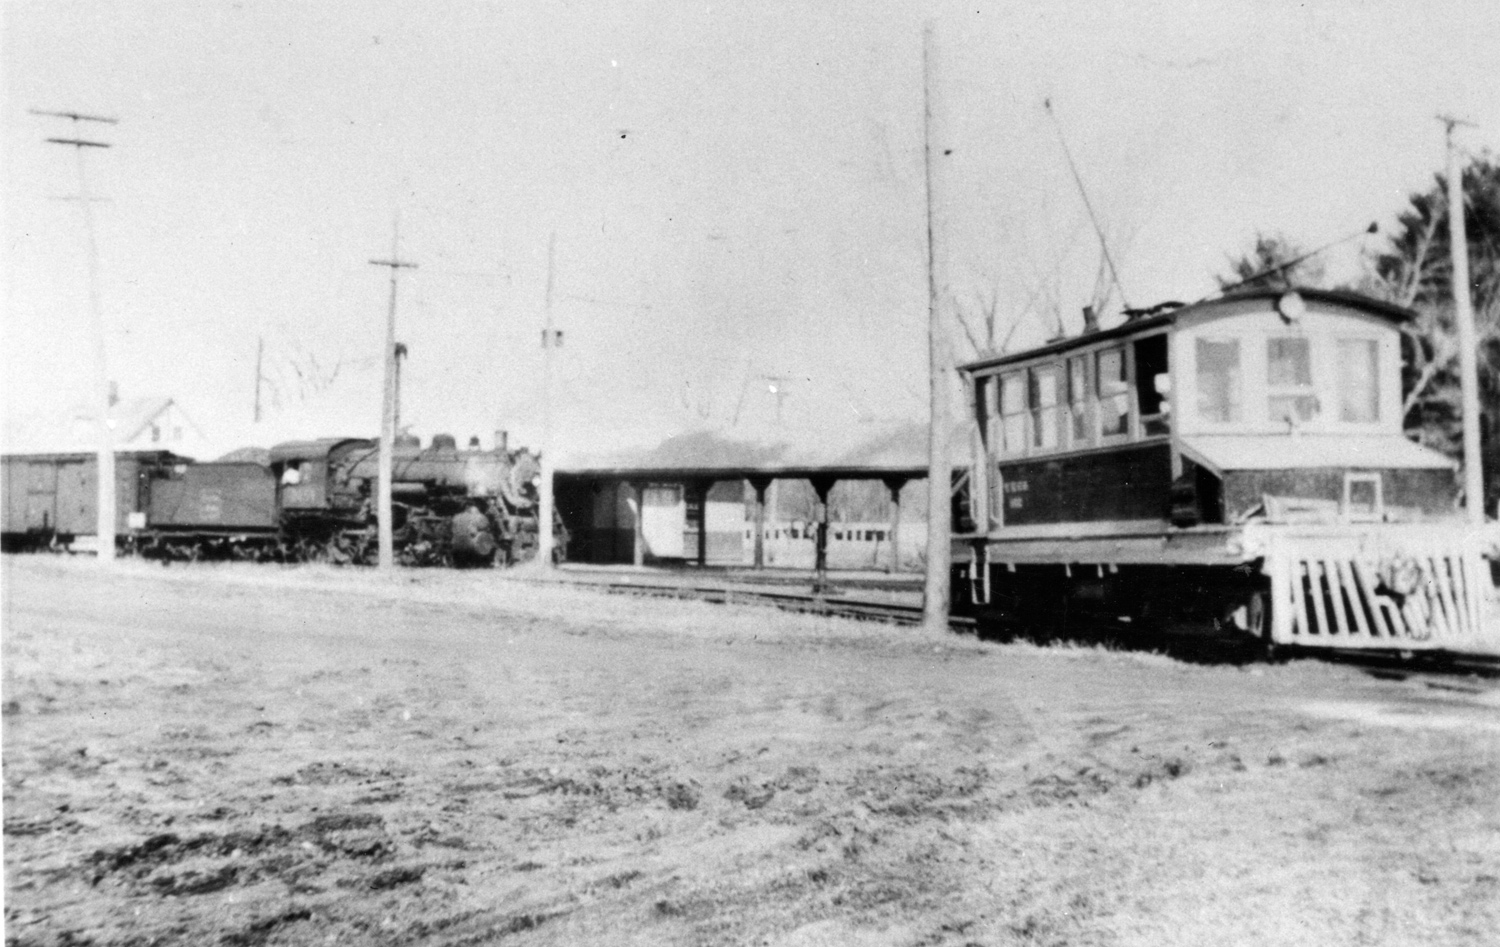 Sanford, Laconia electric locomotive # 102